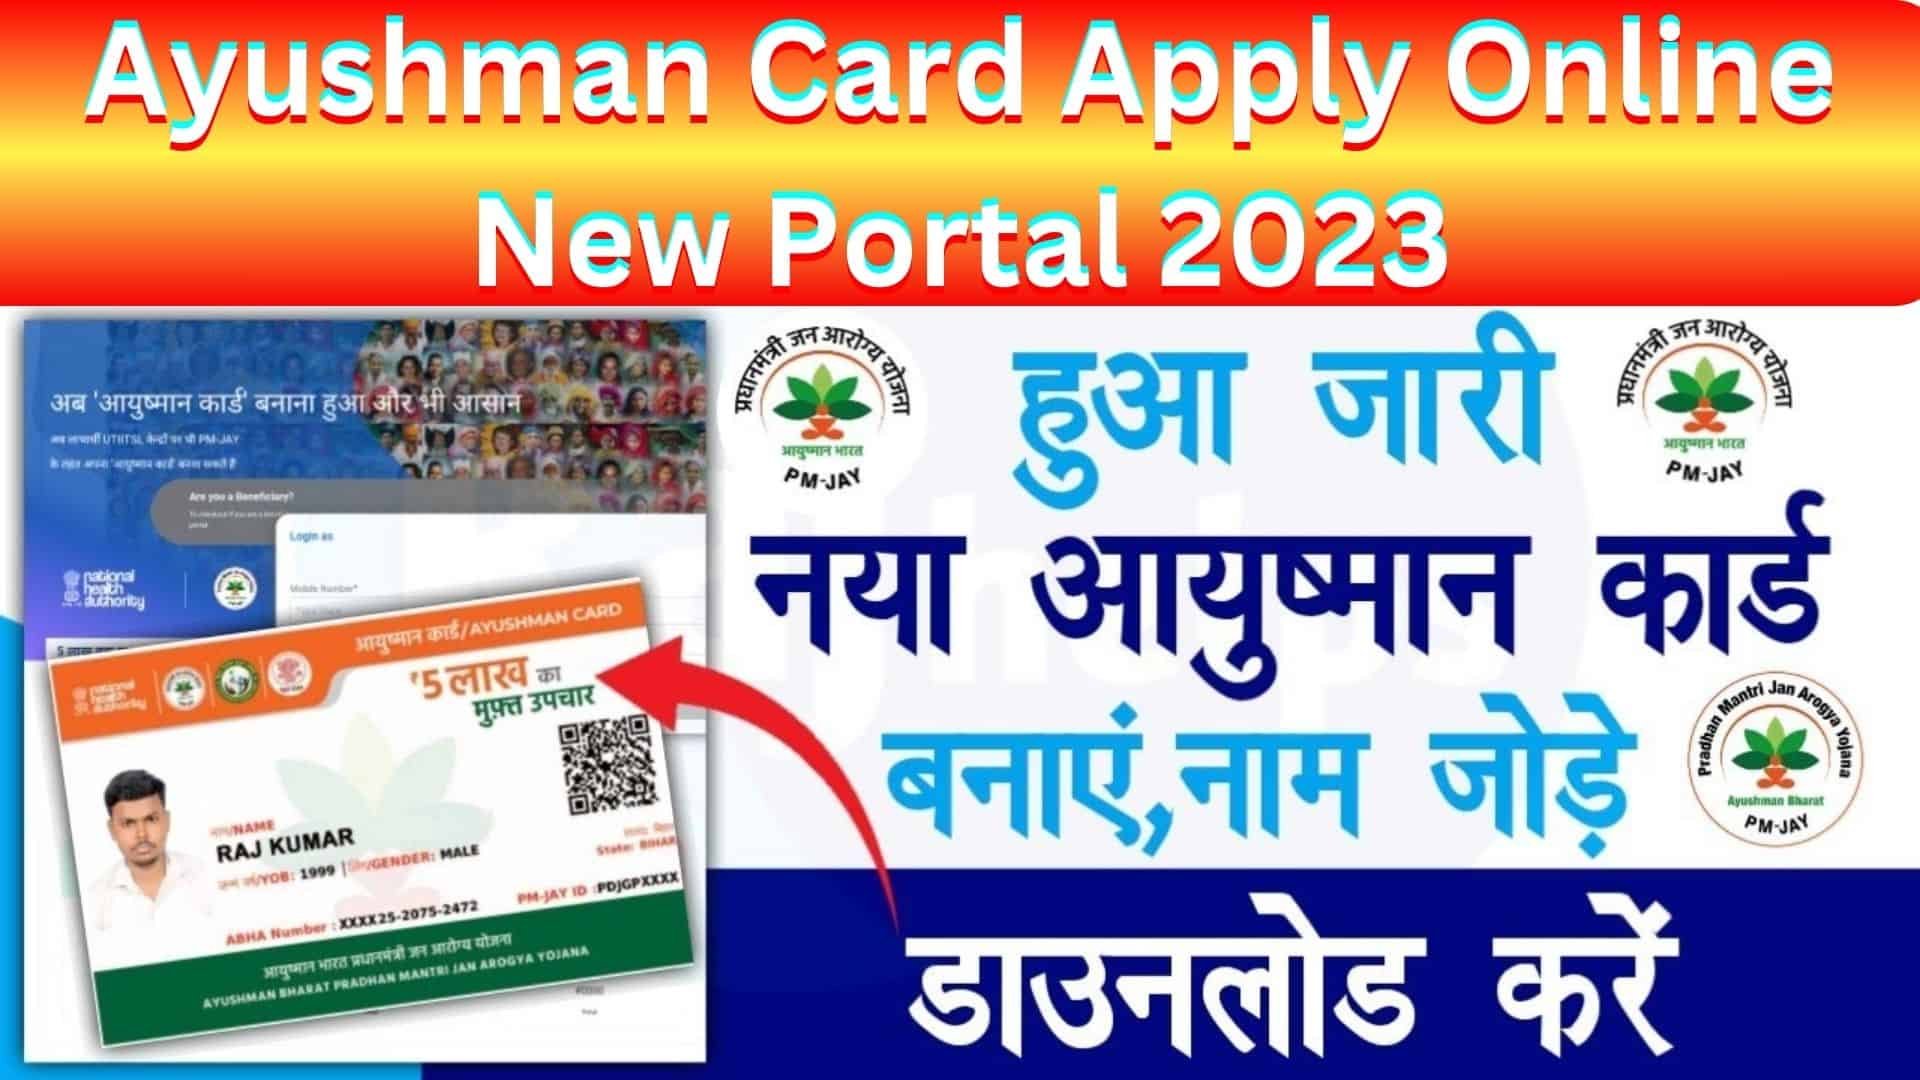 Ayushman Card Apply Online New Portal 2023 : Ayushman Card Name Add, Ayushman Card Apply And Ayushman Card Download